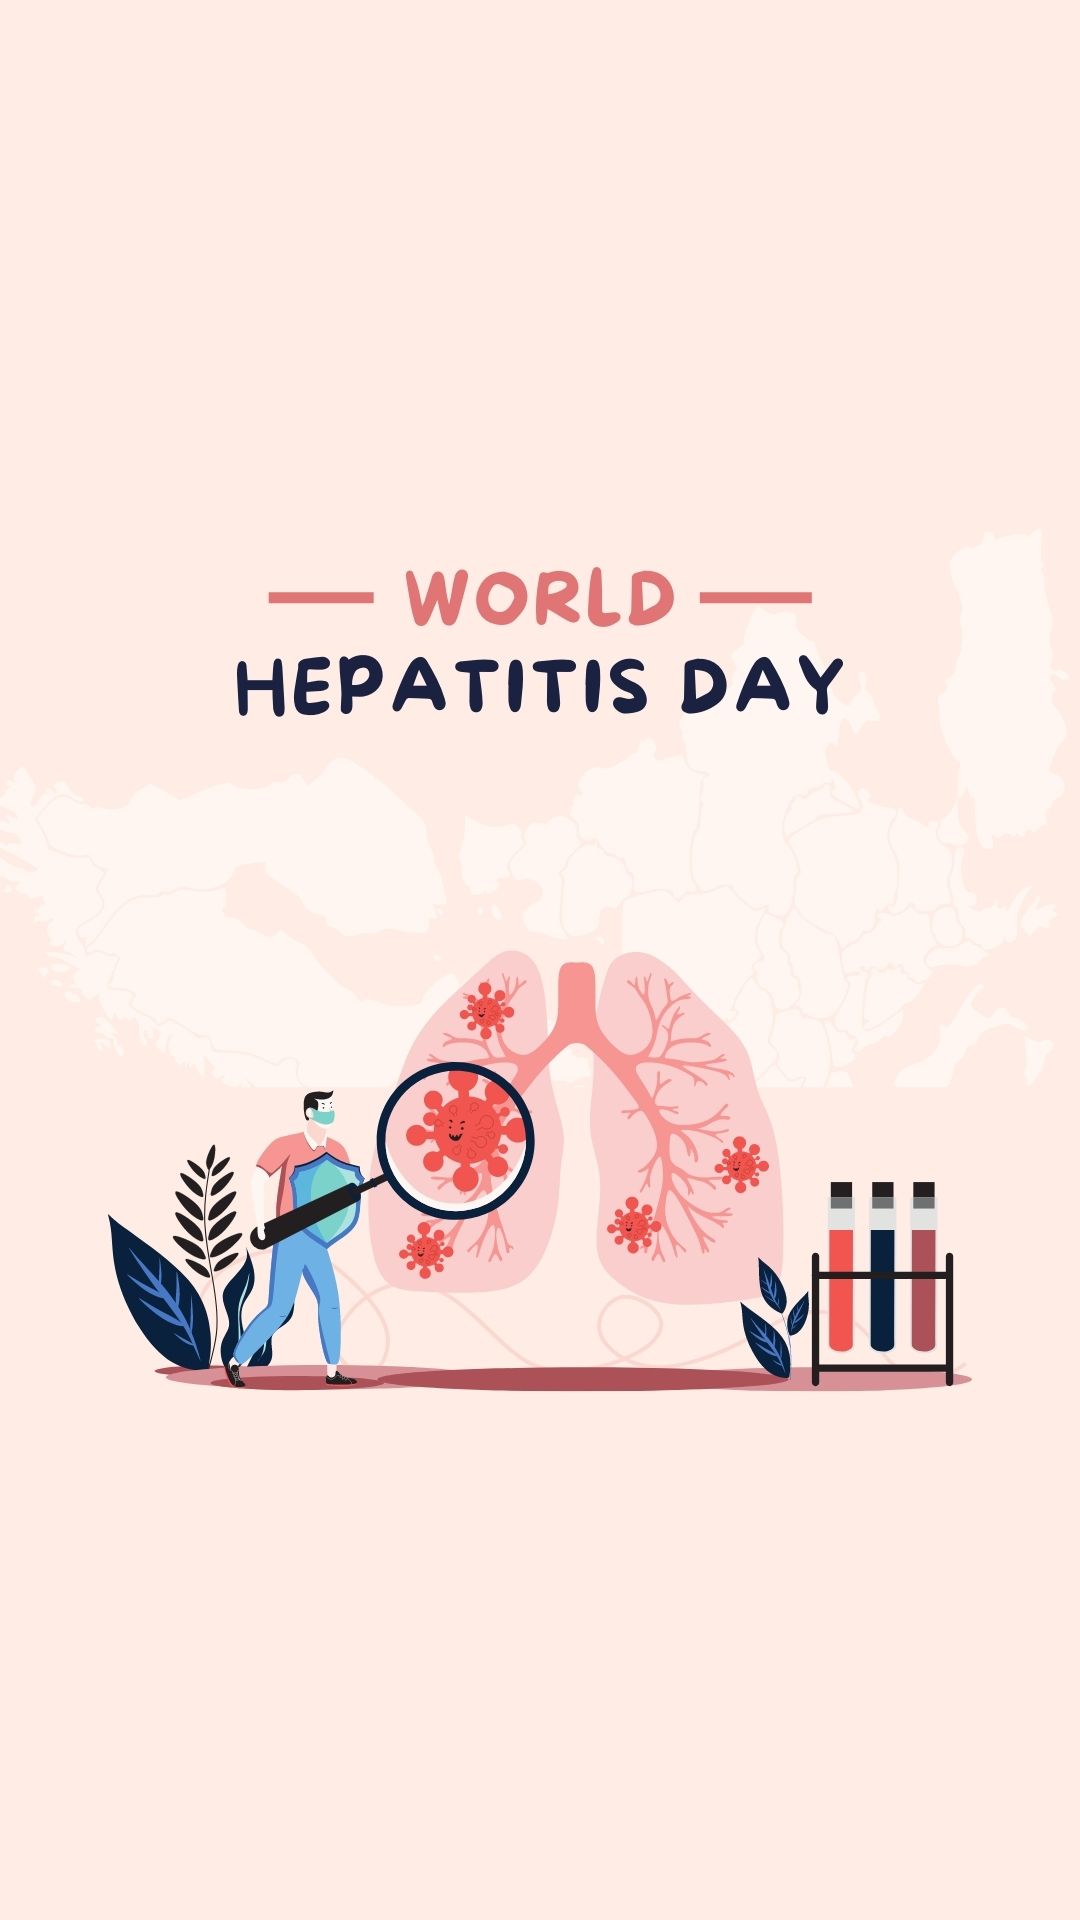 world hepatitis day images for instagram story (1)